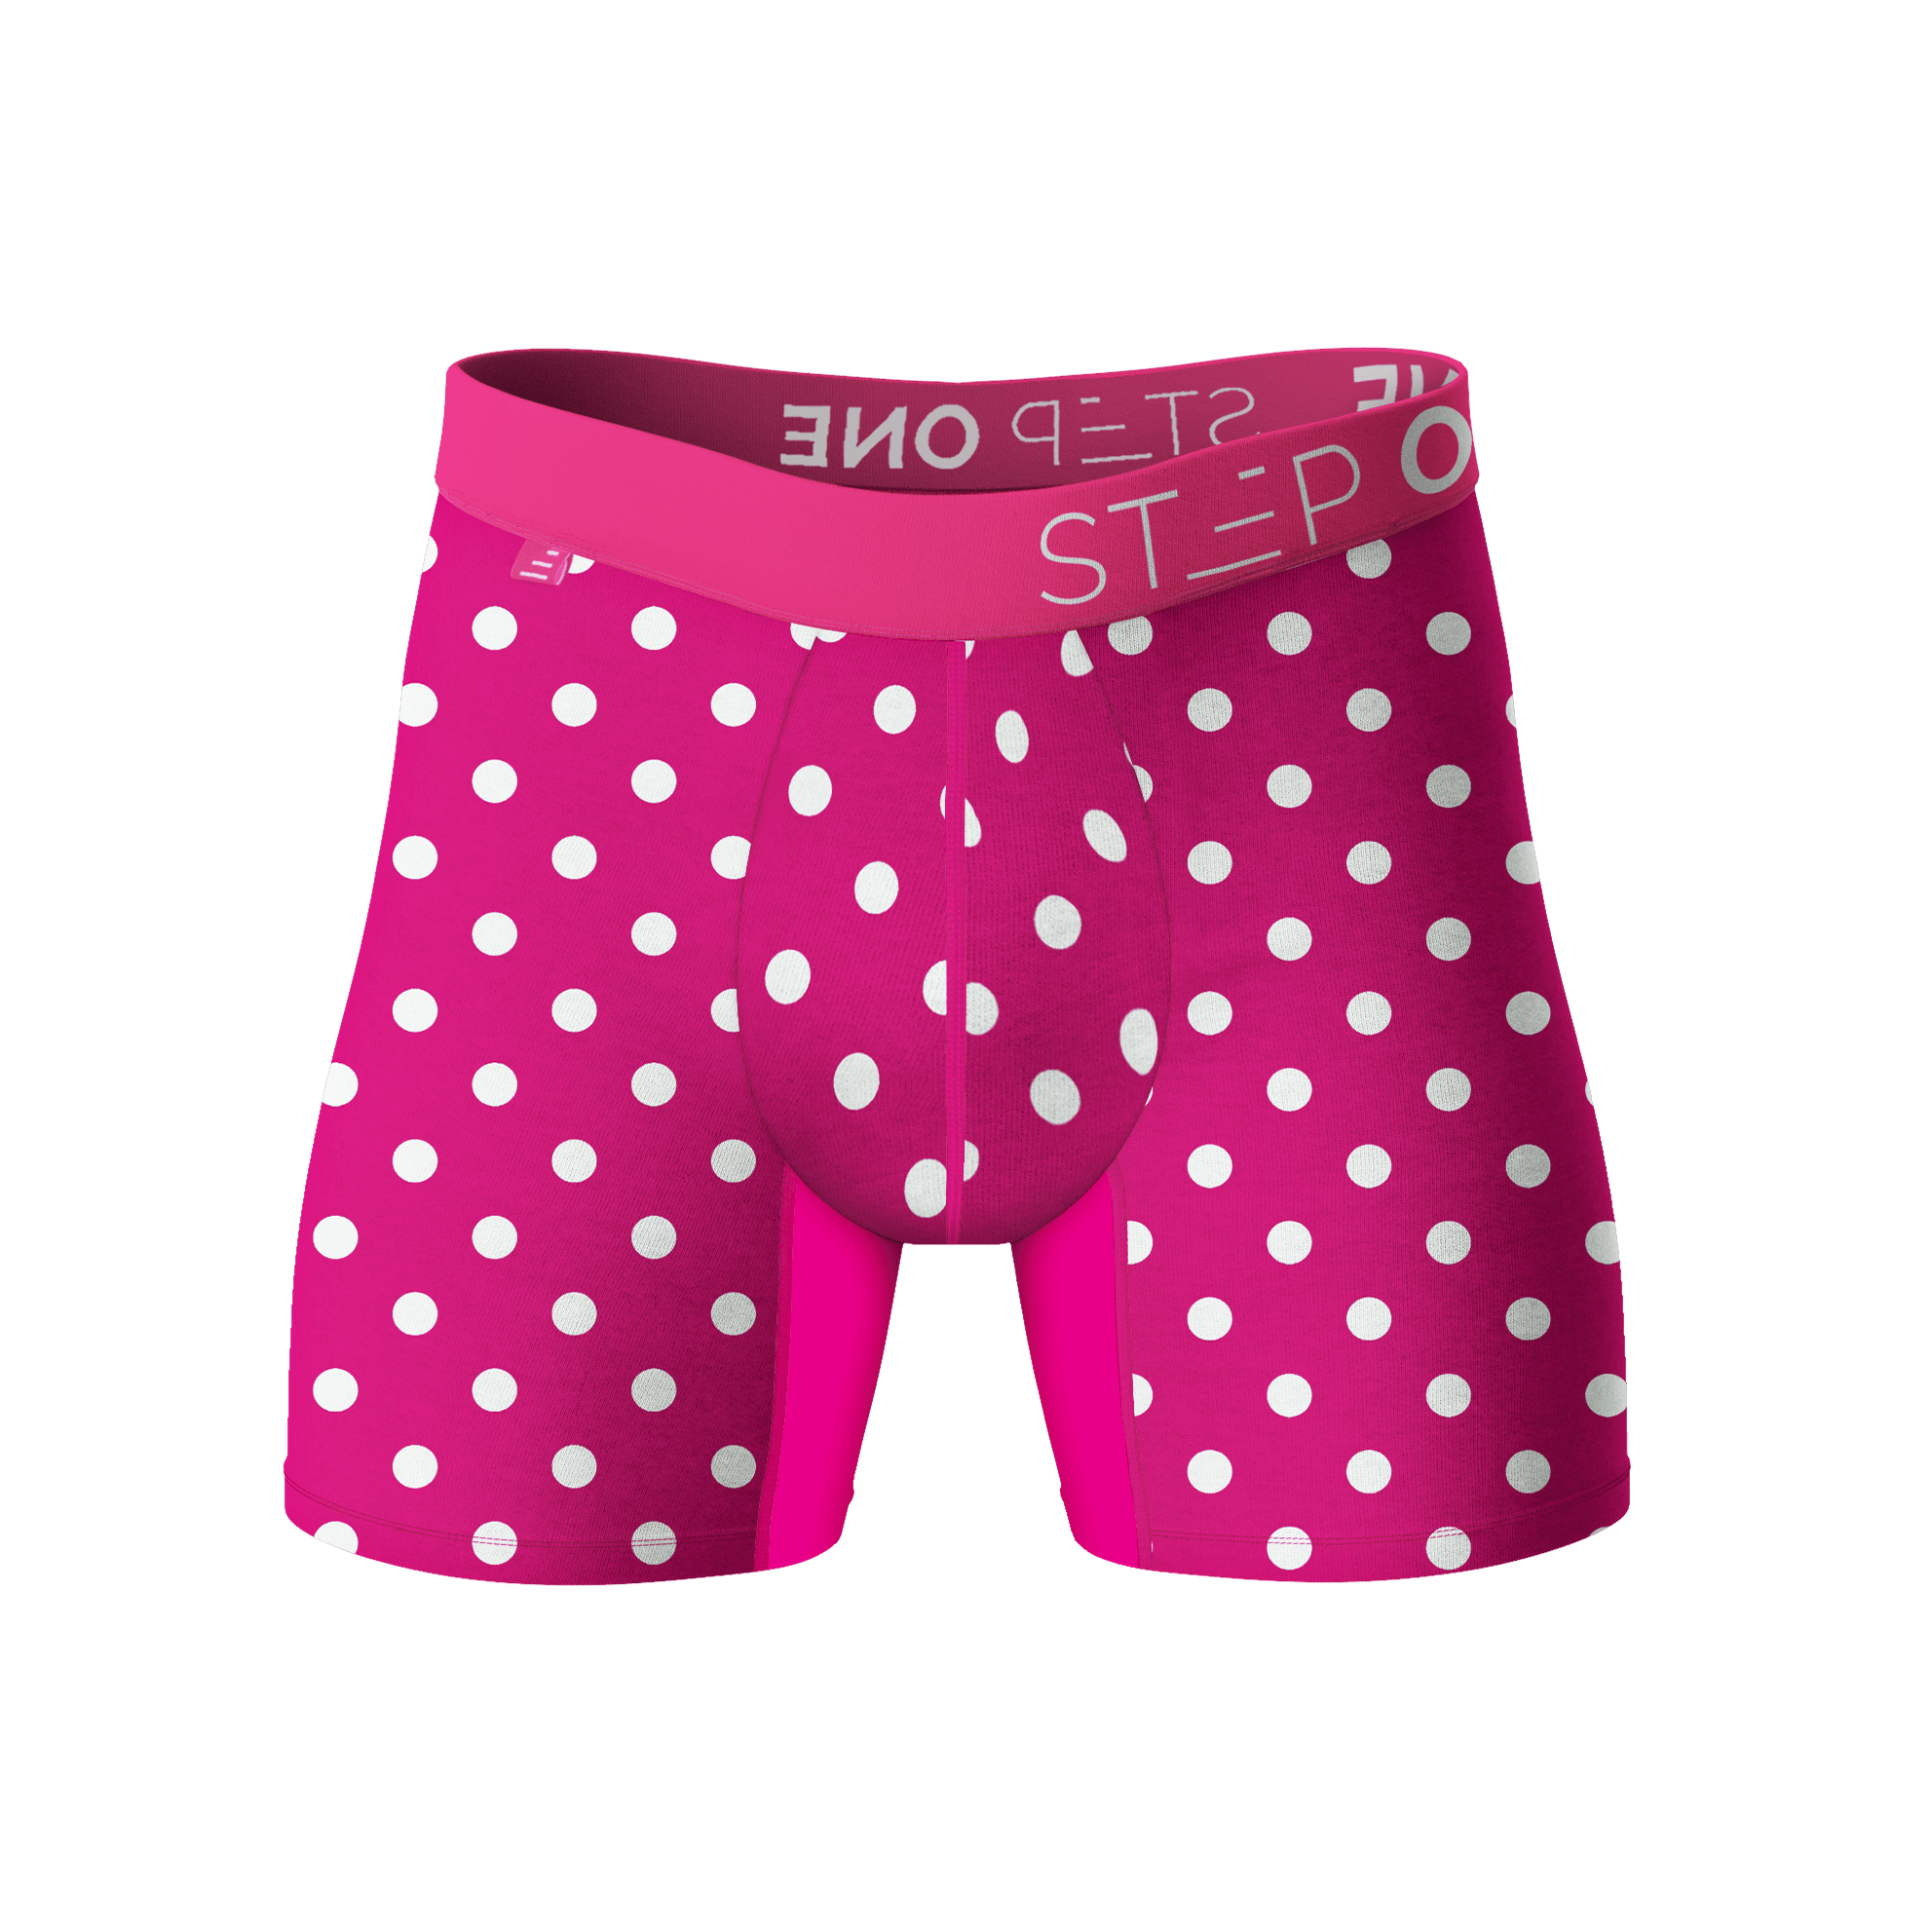 Women's Body Shorts - Donald Trunks